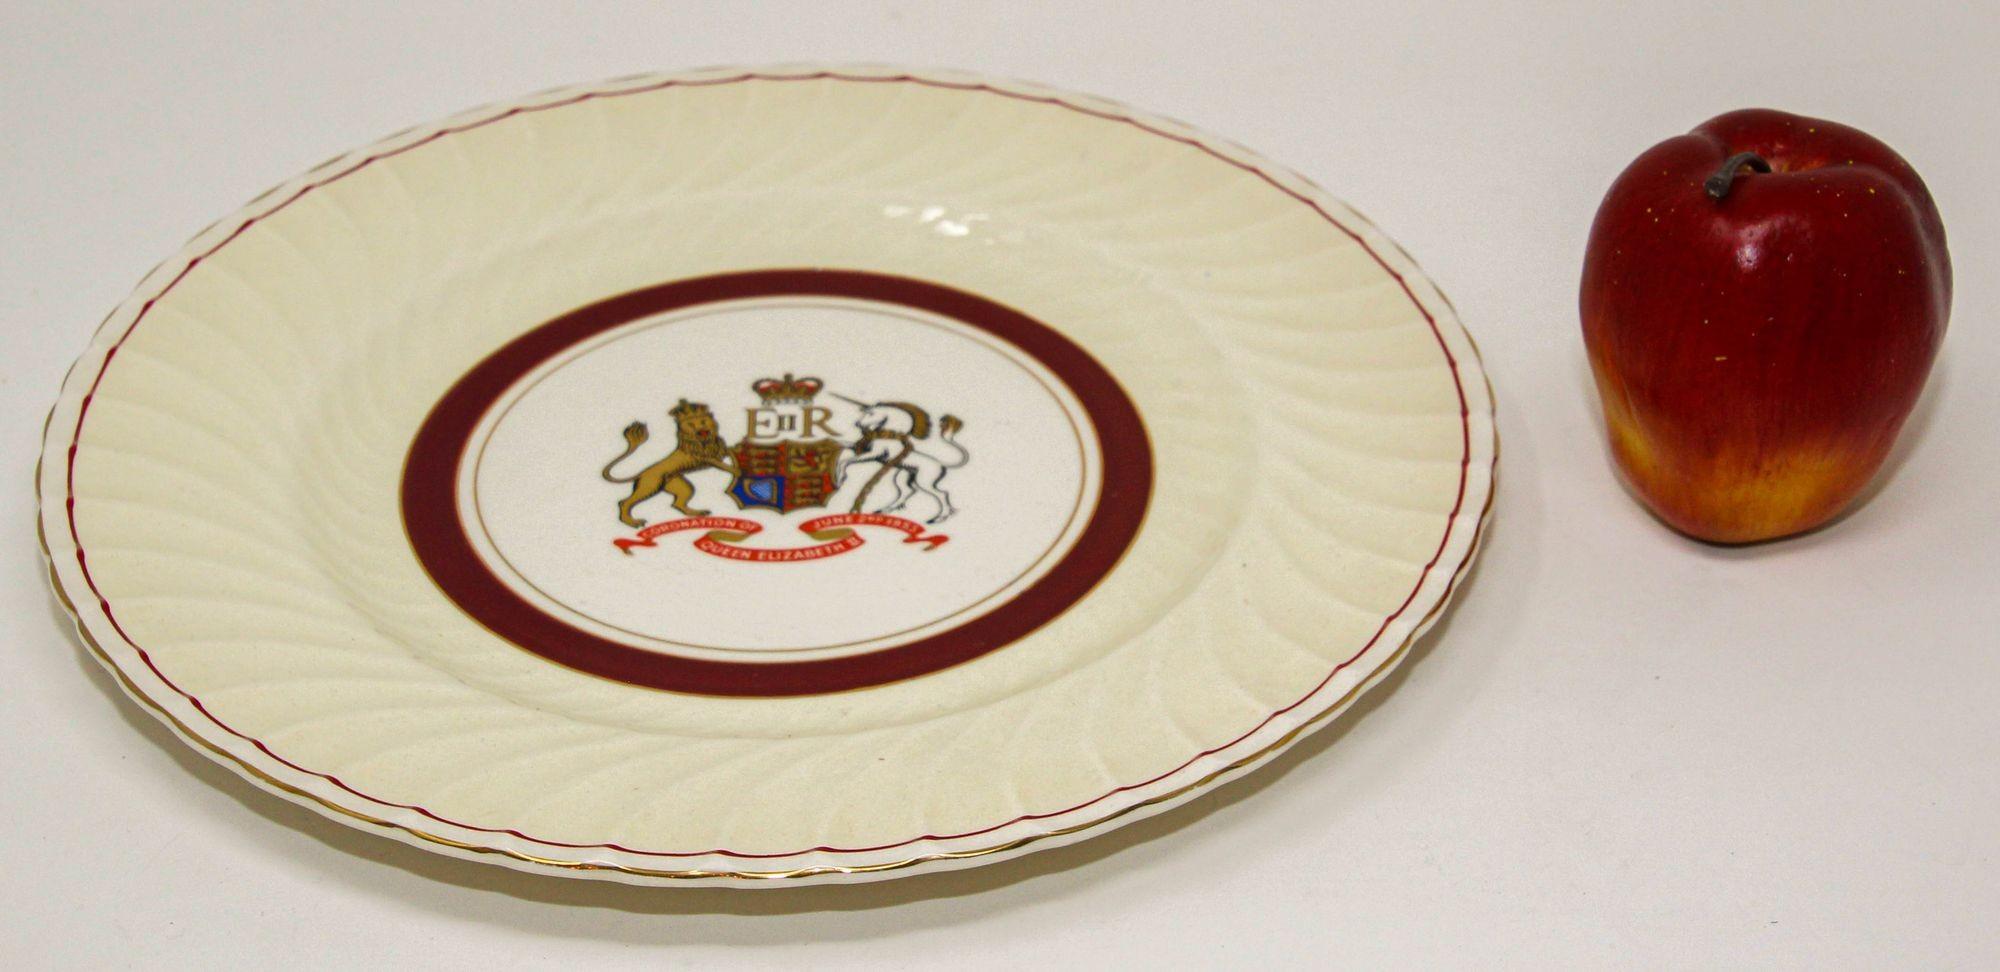 20th Century Coronation Plate Queen Elizabeth II June 2nd 1953 Burleigh Ware Burslem England For Sale